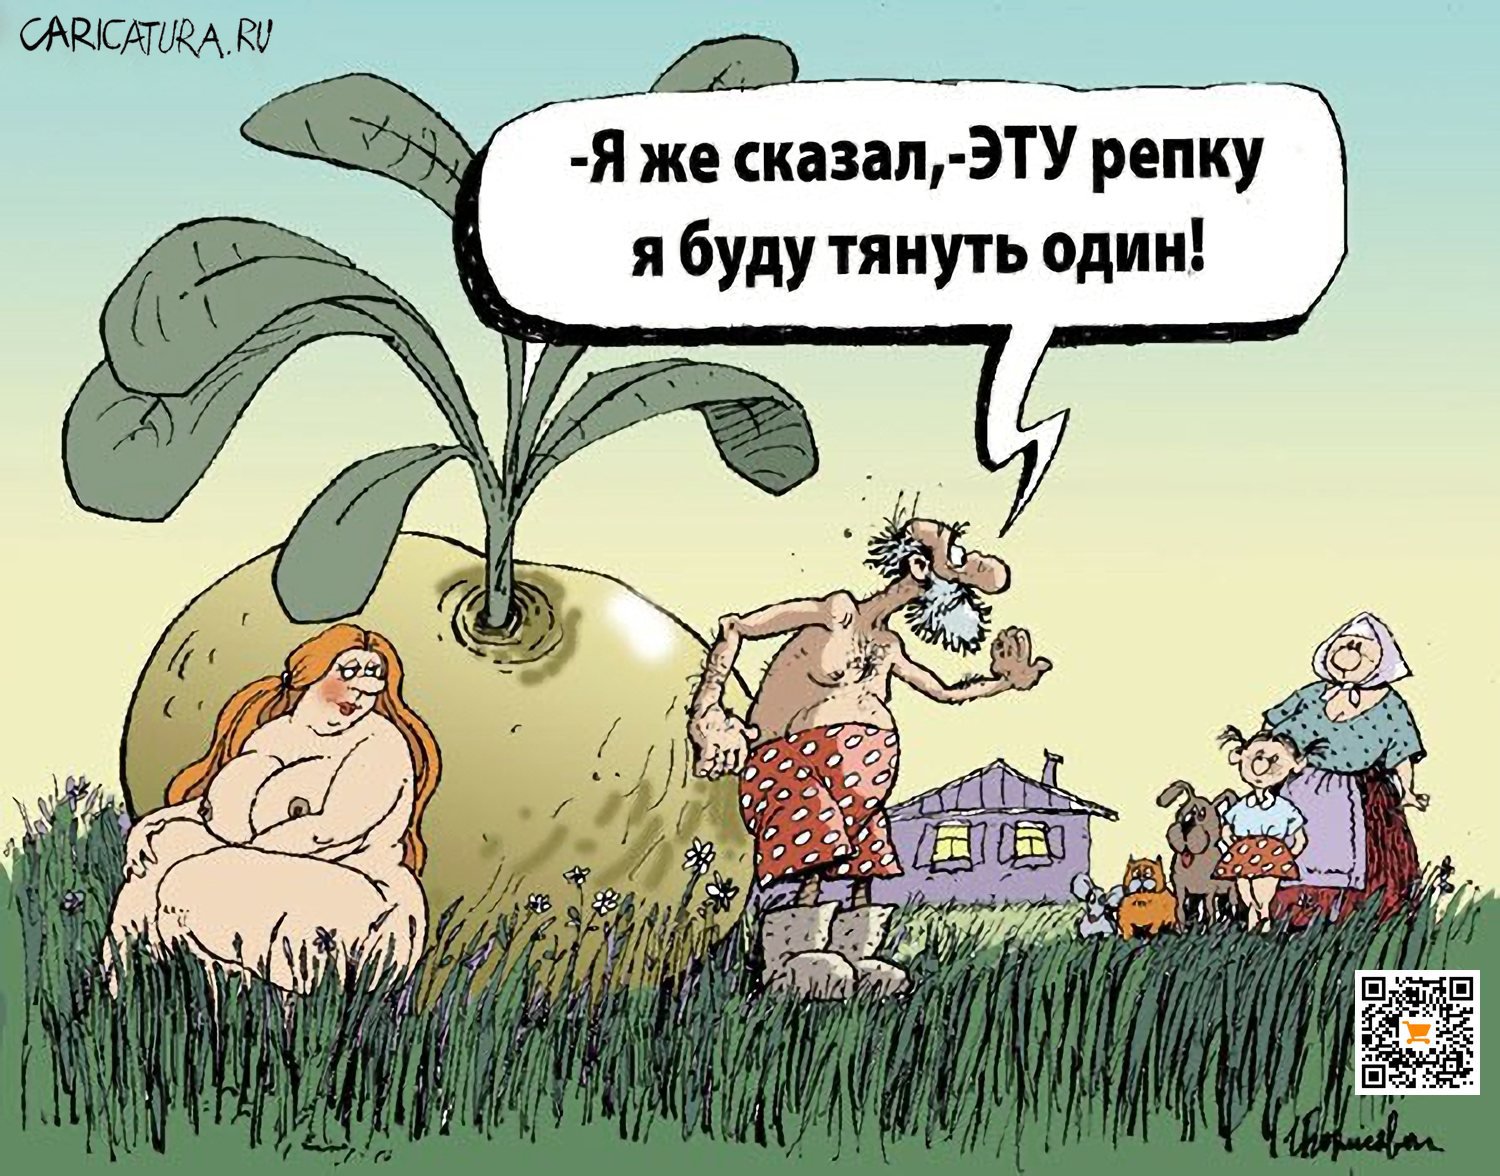 http://caricatura.ru/erotica/elistratov/pic/1046.jpg